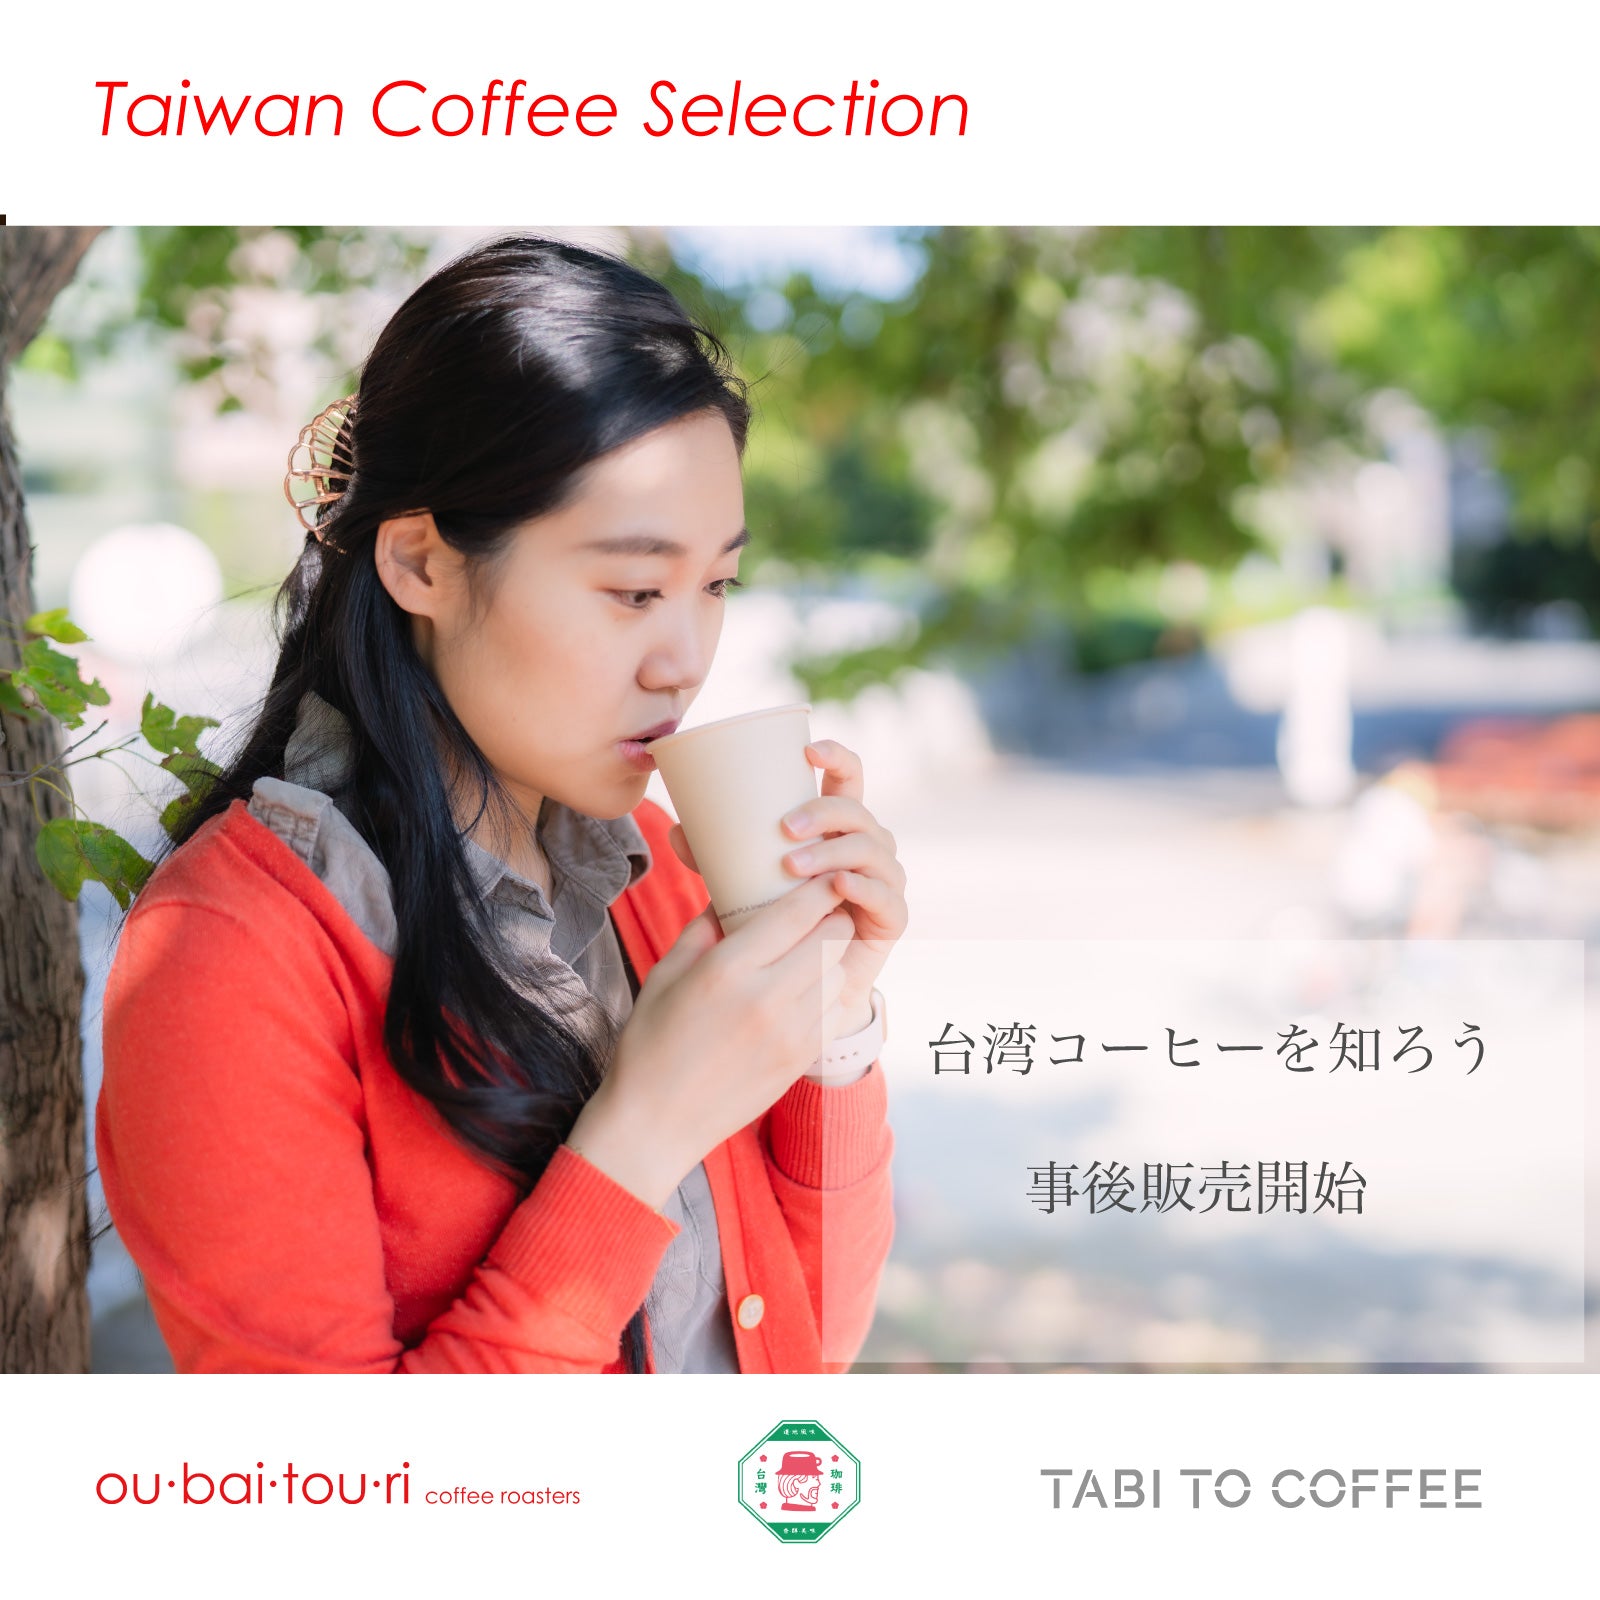 Taiwan Coffee Selection